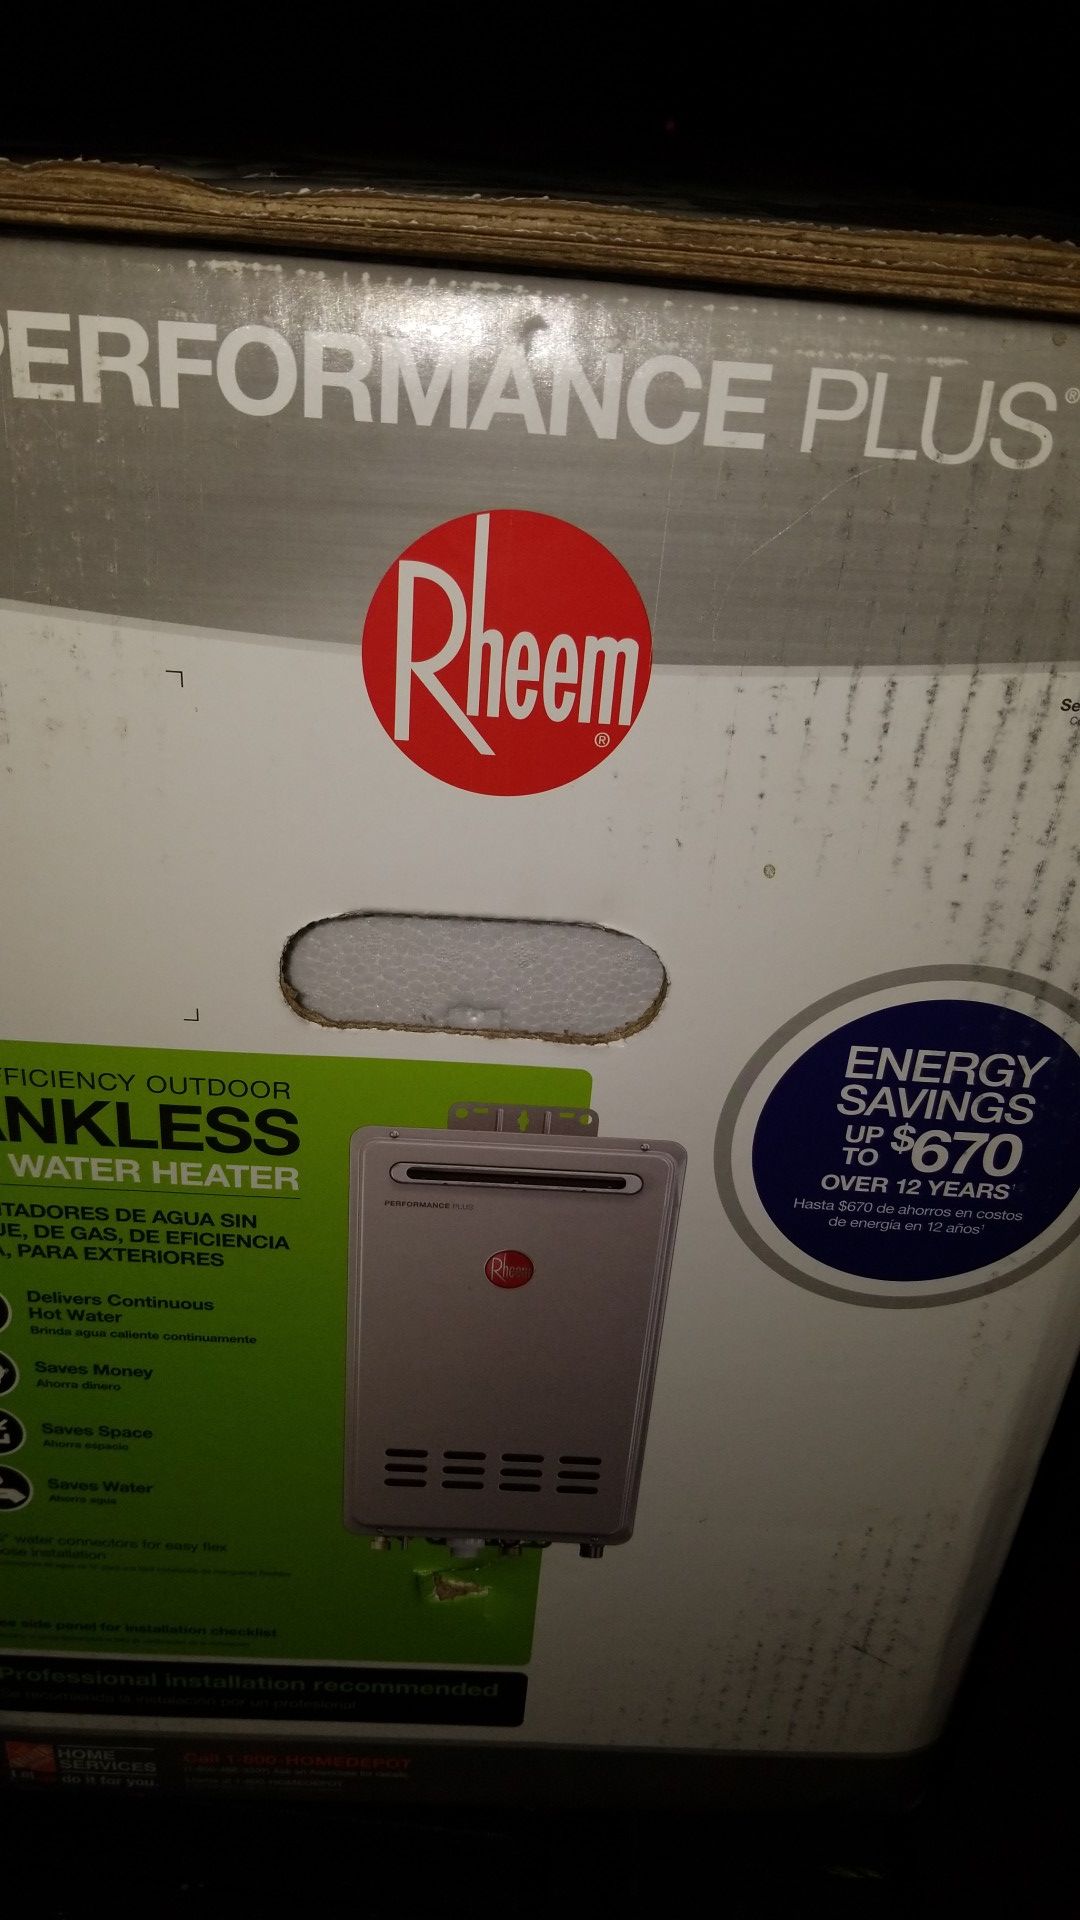 Rheem outdoor tankless water heater